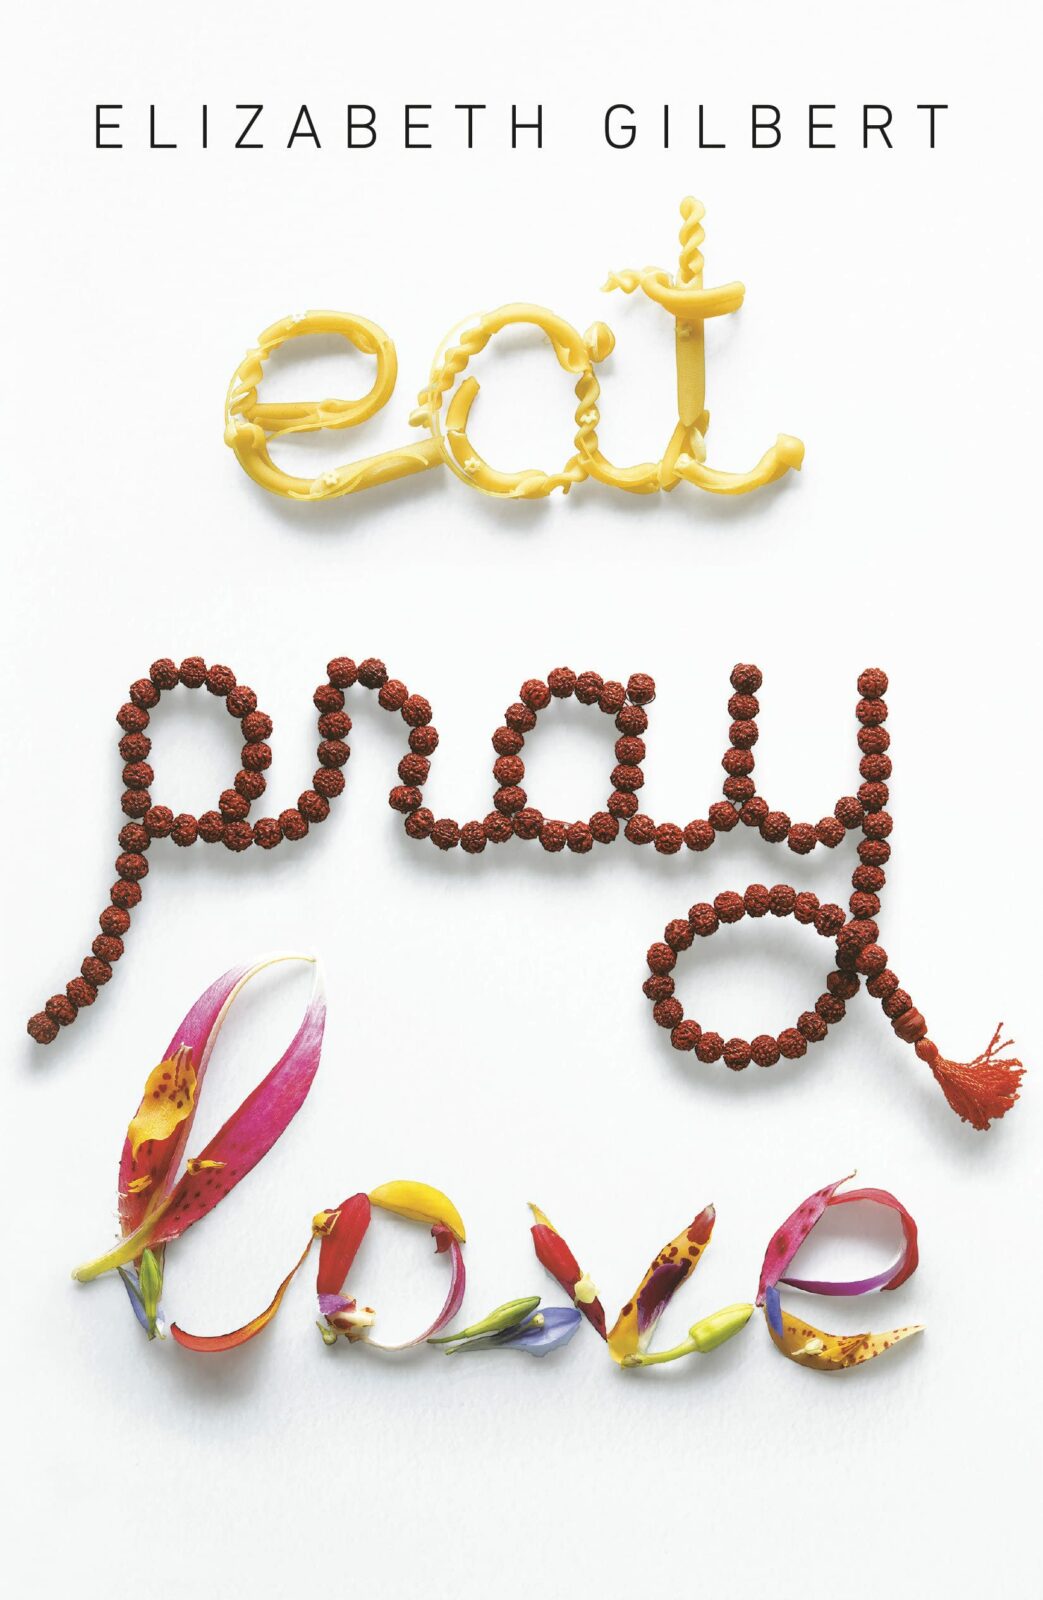 Eat Pray Love the famous travel memoir by Elizabeth Gilbert